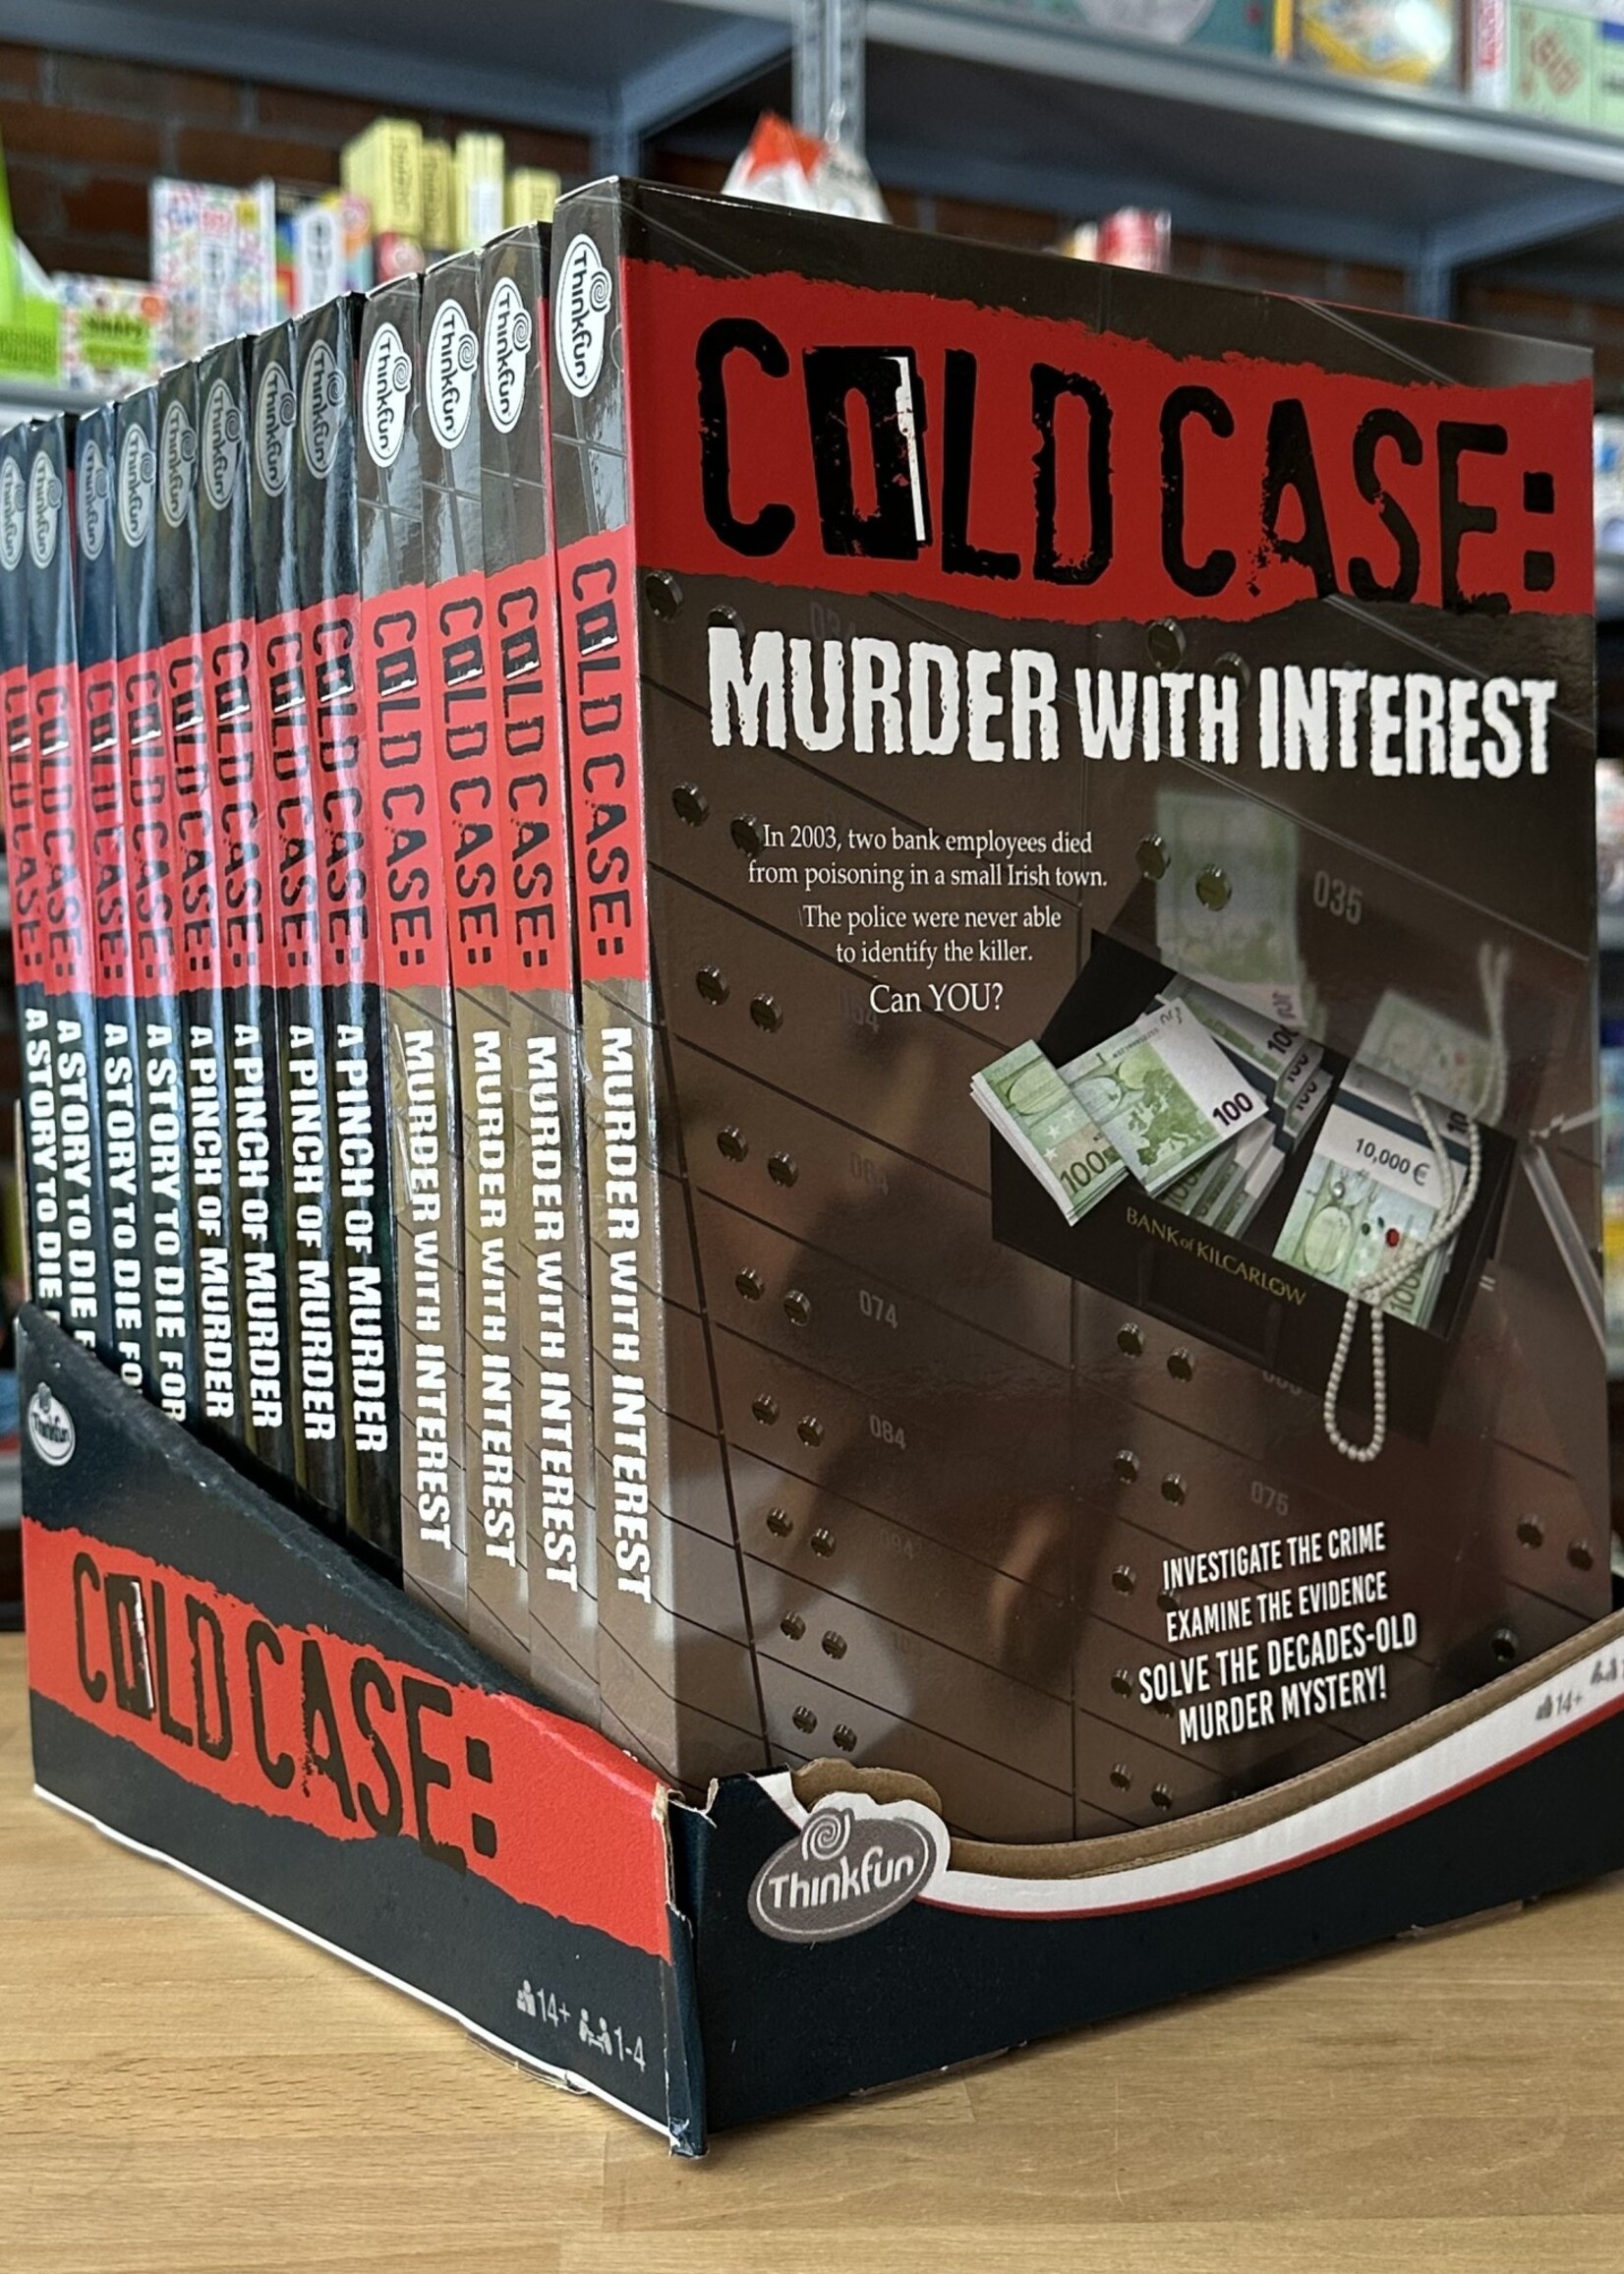 ThinkFun Game - Cold Case: A Pinch of Murder